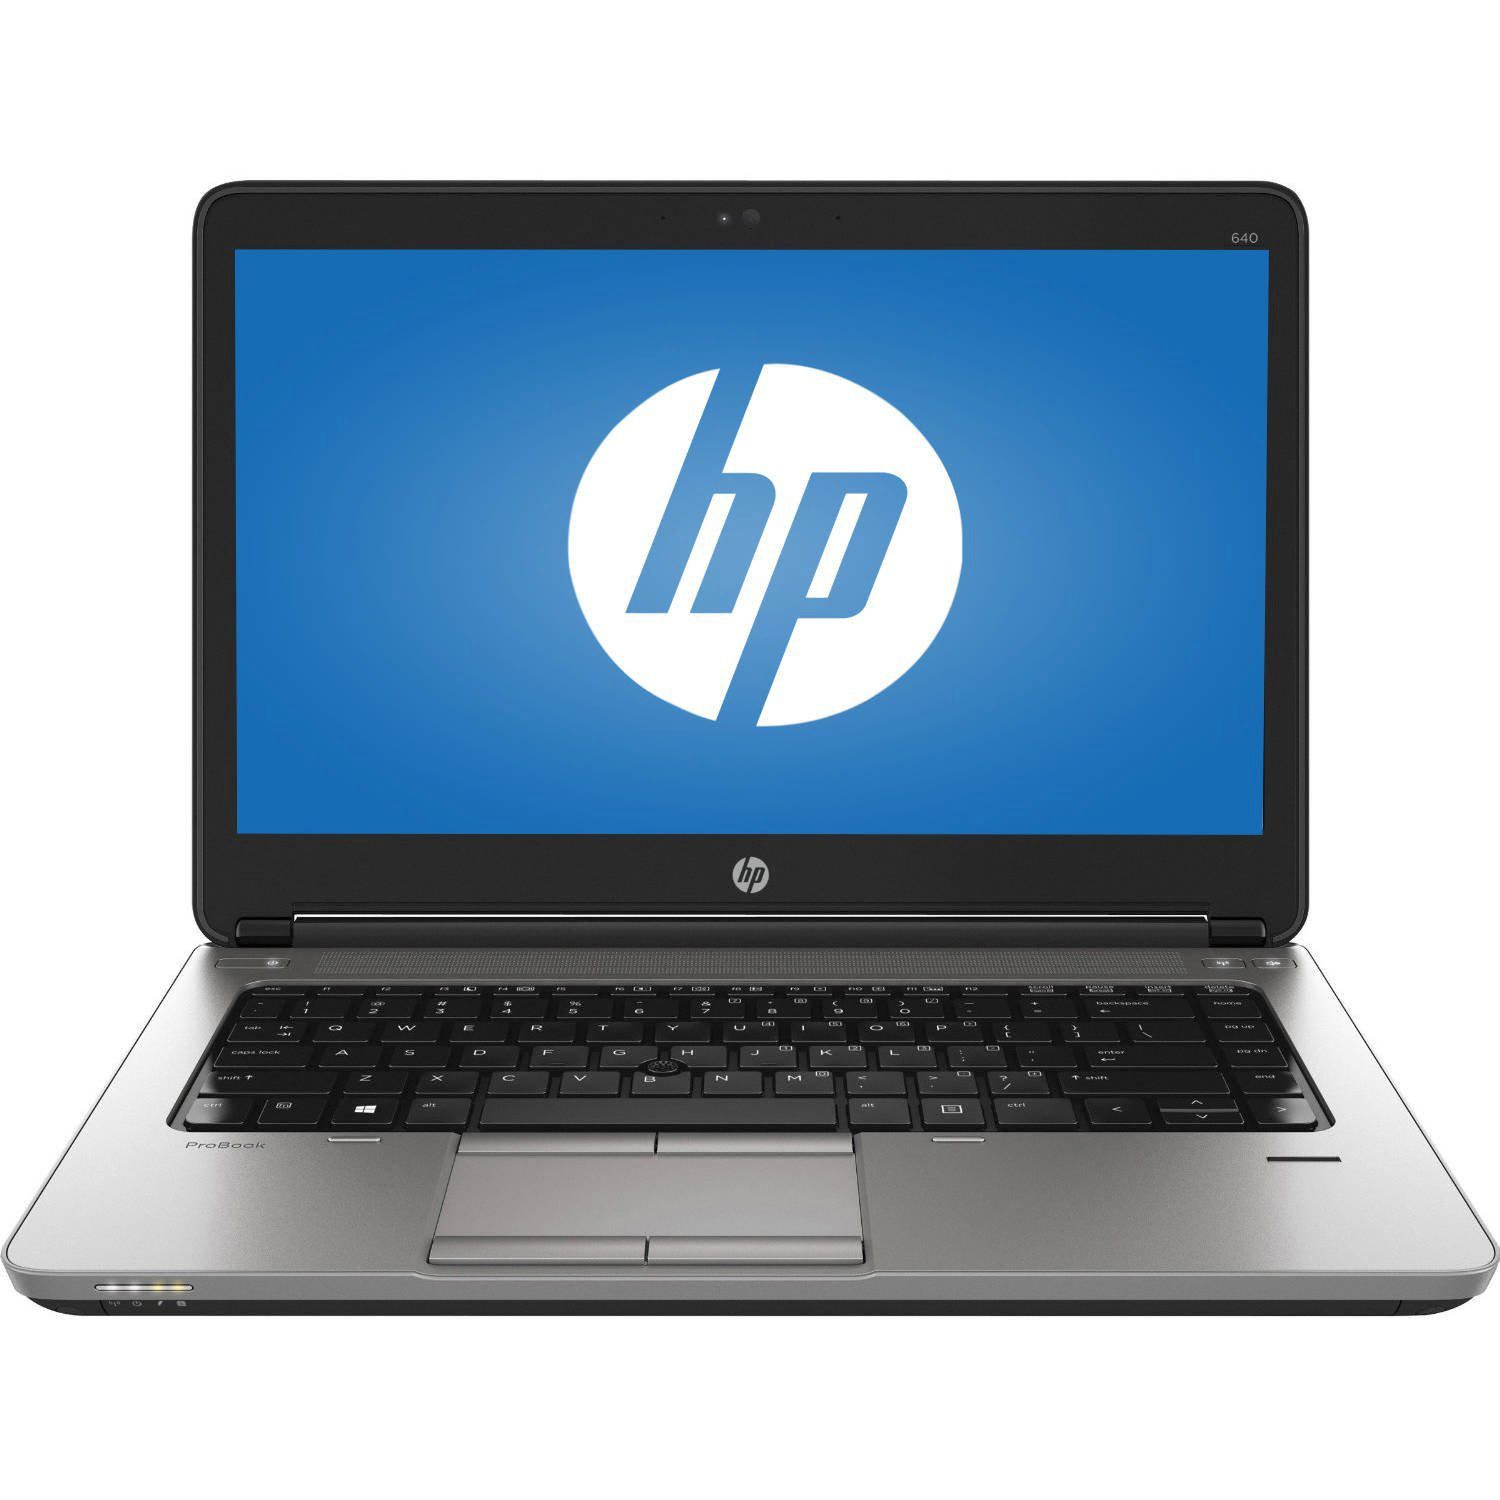 Refurbished Hp Probook 640 G1 14” Laptop With Intel Core I5 4300m 26 Ghz Processor Walmart 5109